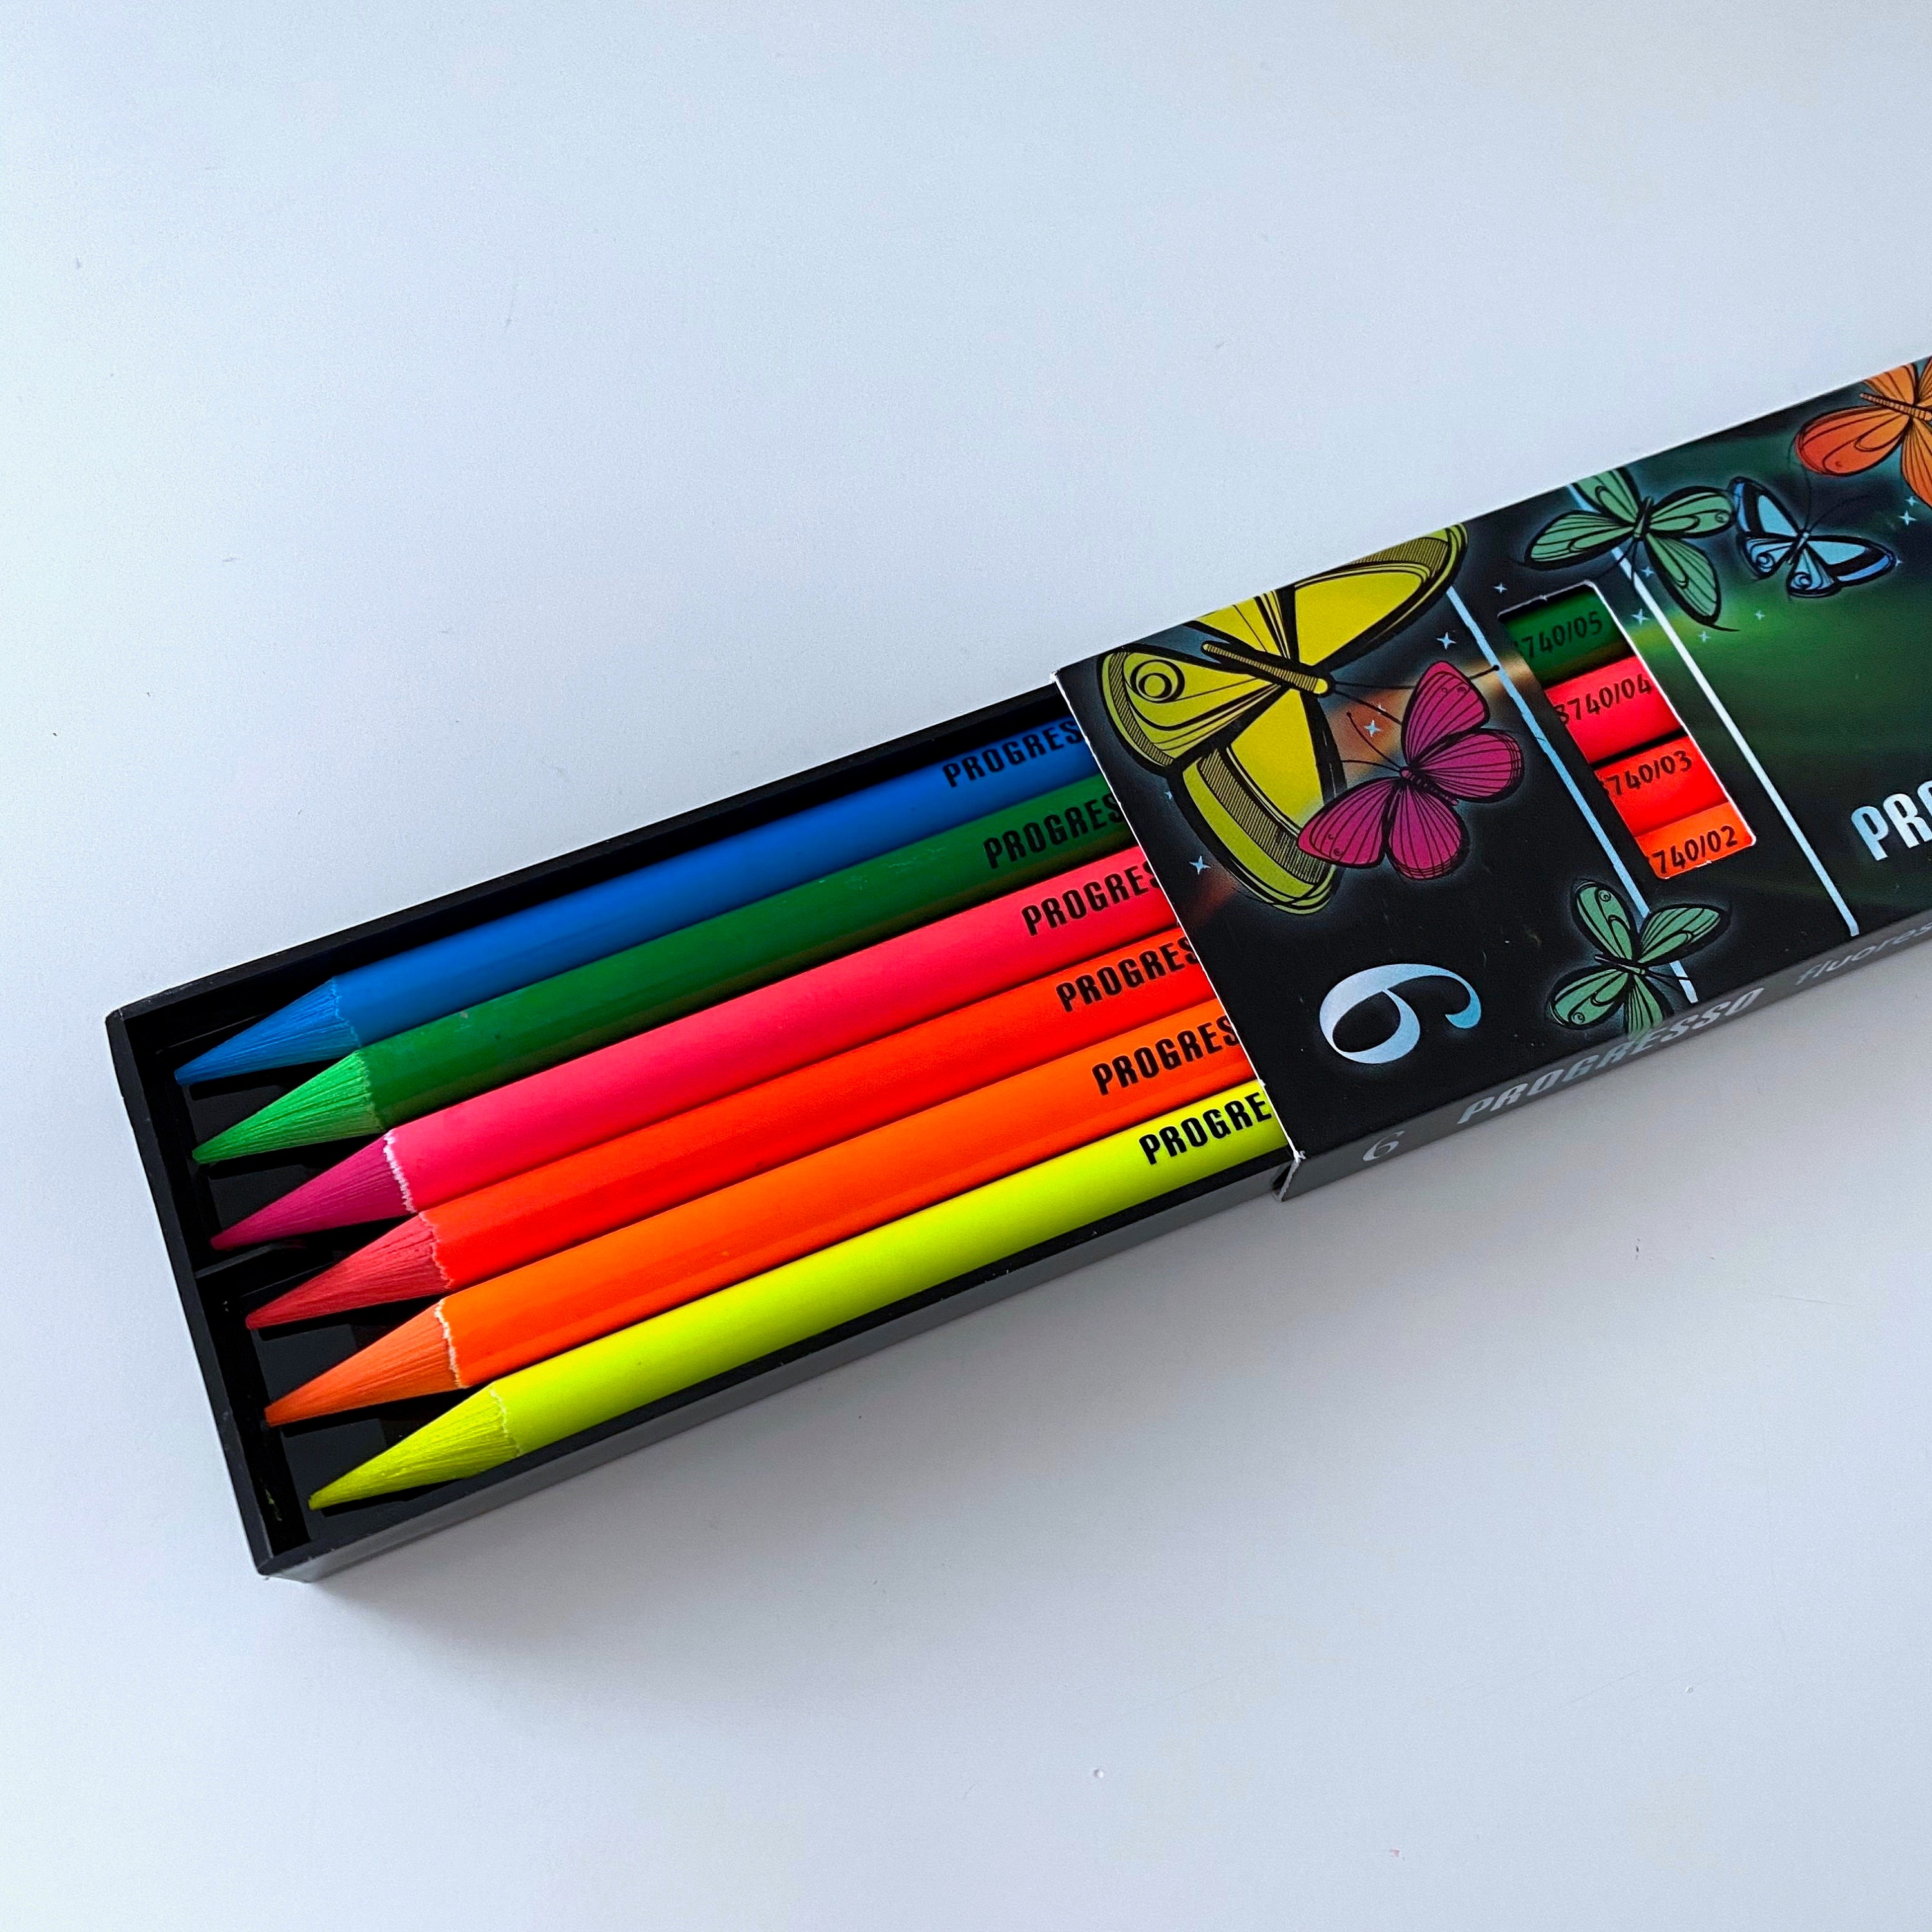 Woodless Colored Pencil Set KOH-I-NOOR PROGRESSO Fluorescent 8741 Crayon -   Denmark